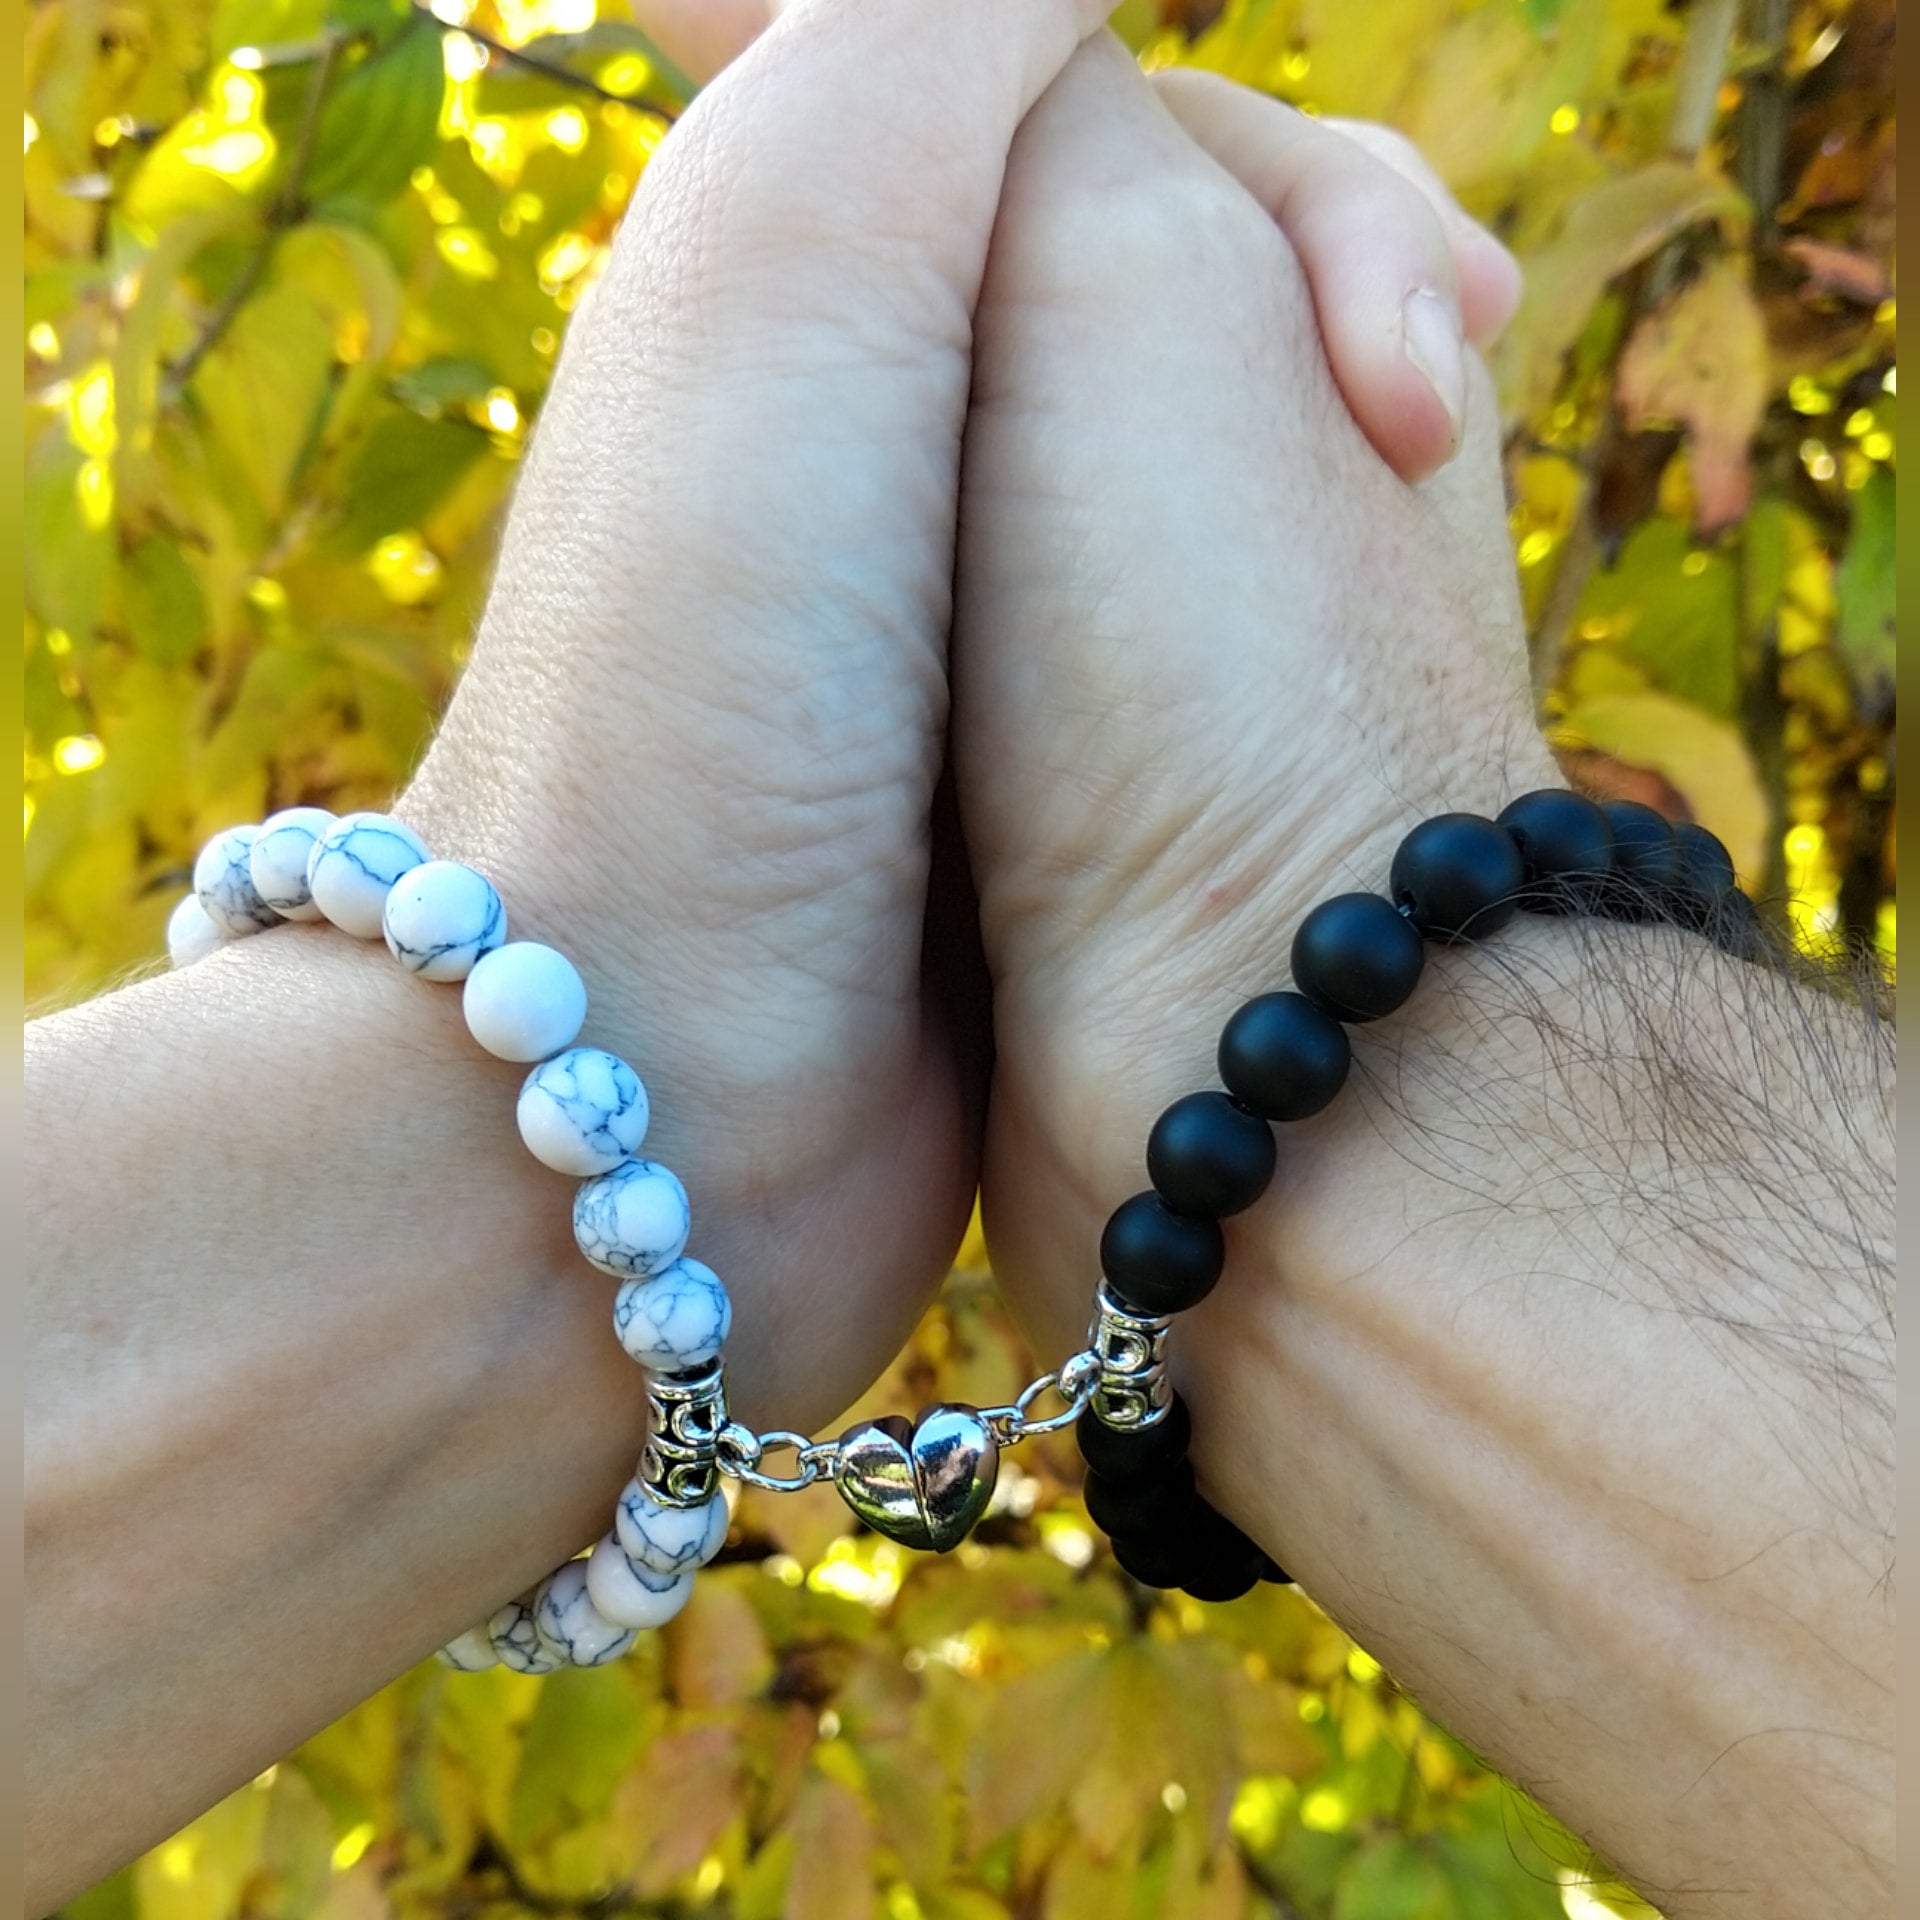 2pcs/Set Natural Stone beads gift for lovers, heart shaped, geometric magnet attraction Couple bracelet, friendship bracelet.